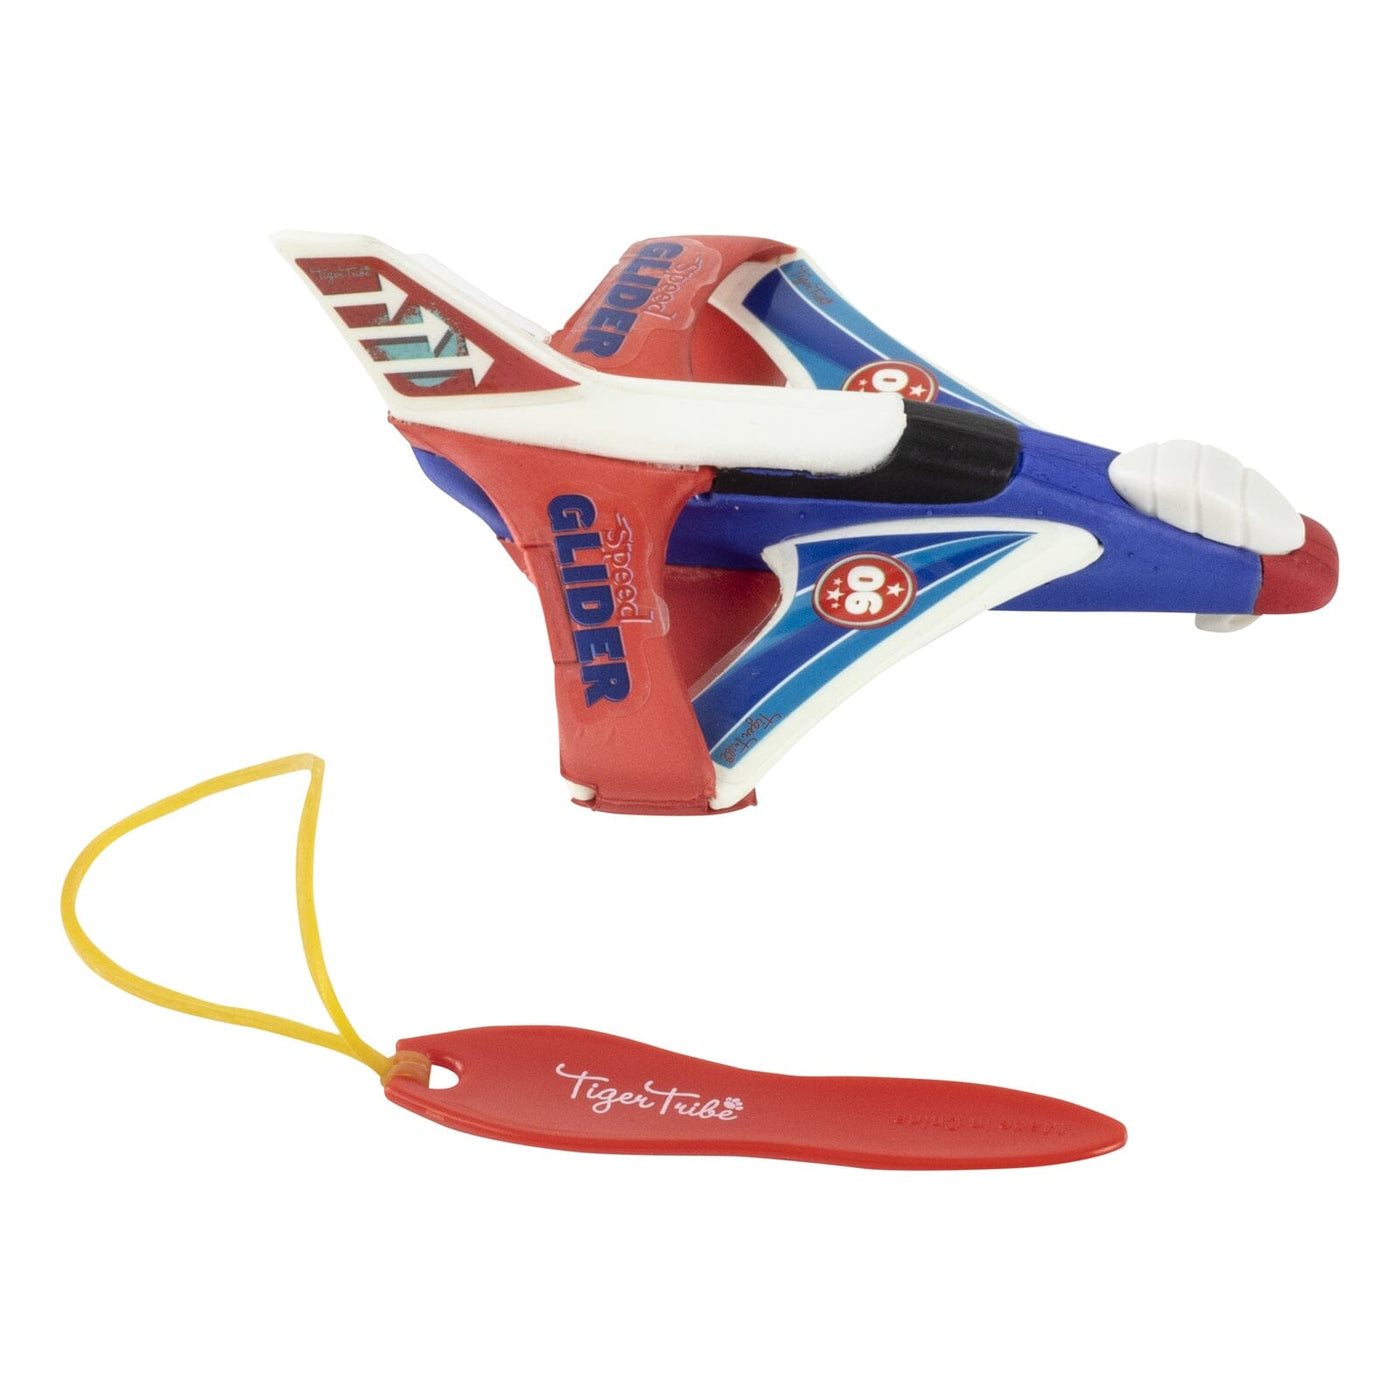 Speed Glider Toy Tiger Tribe 